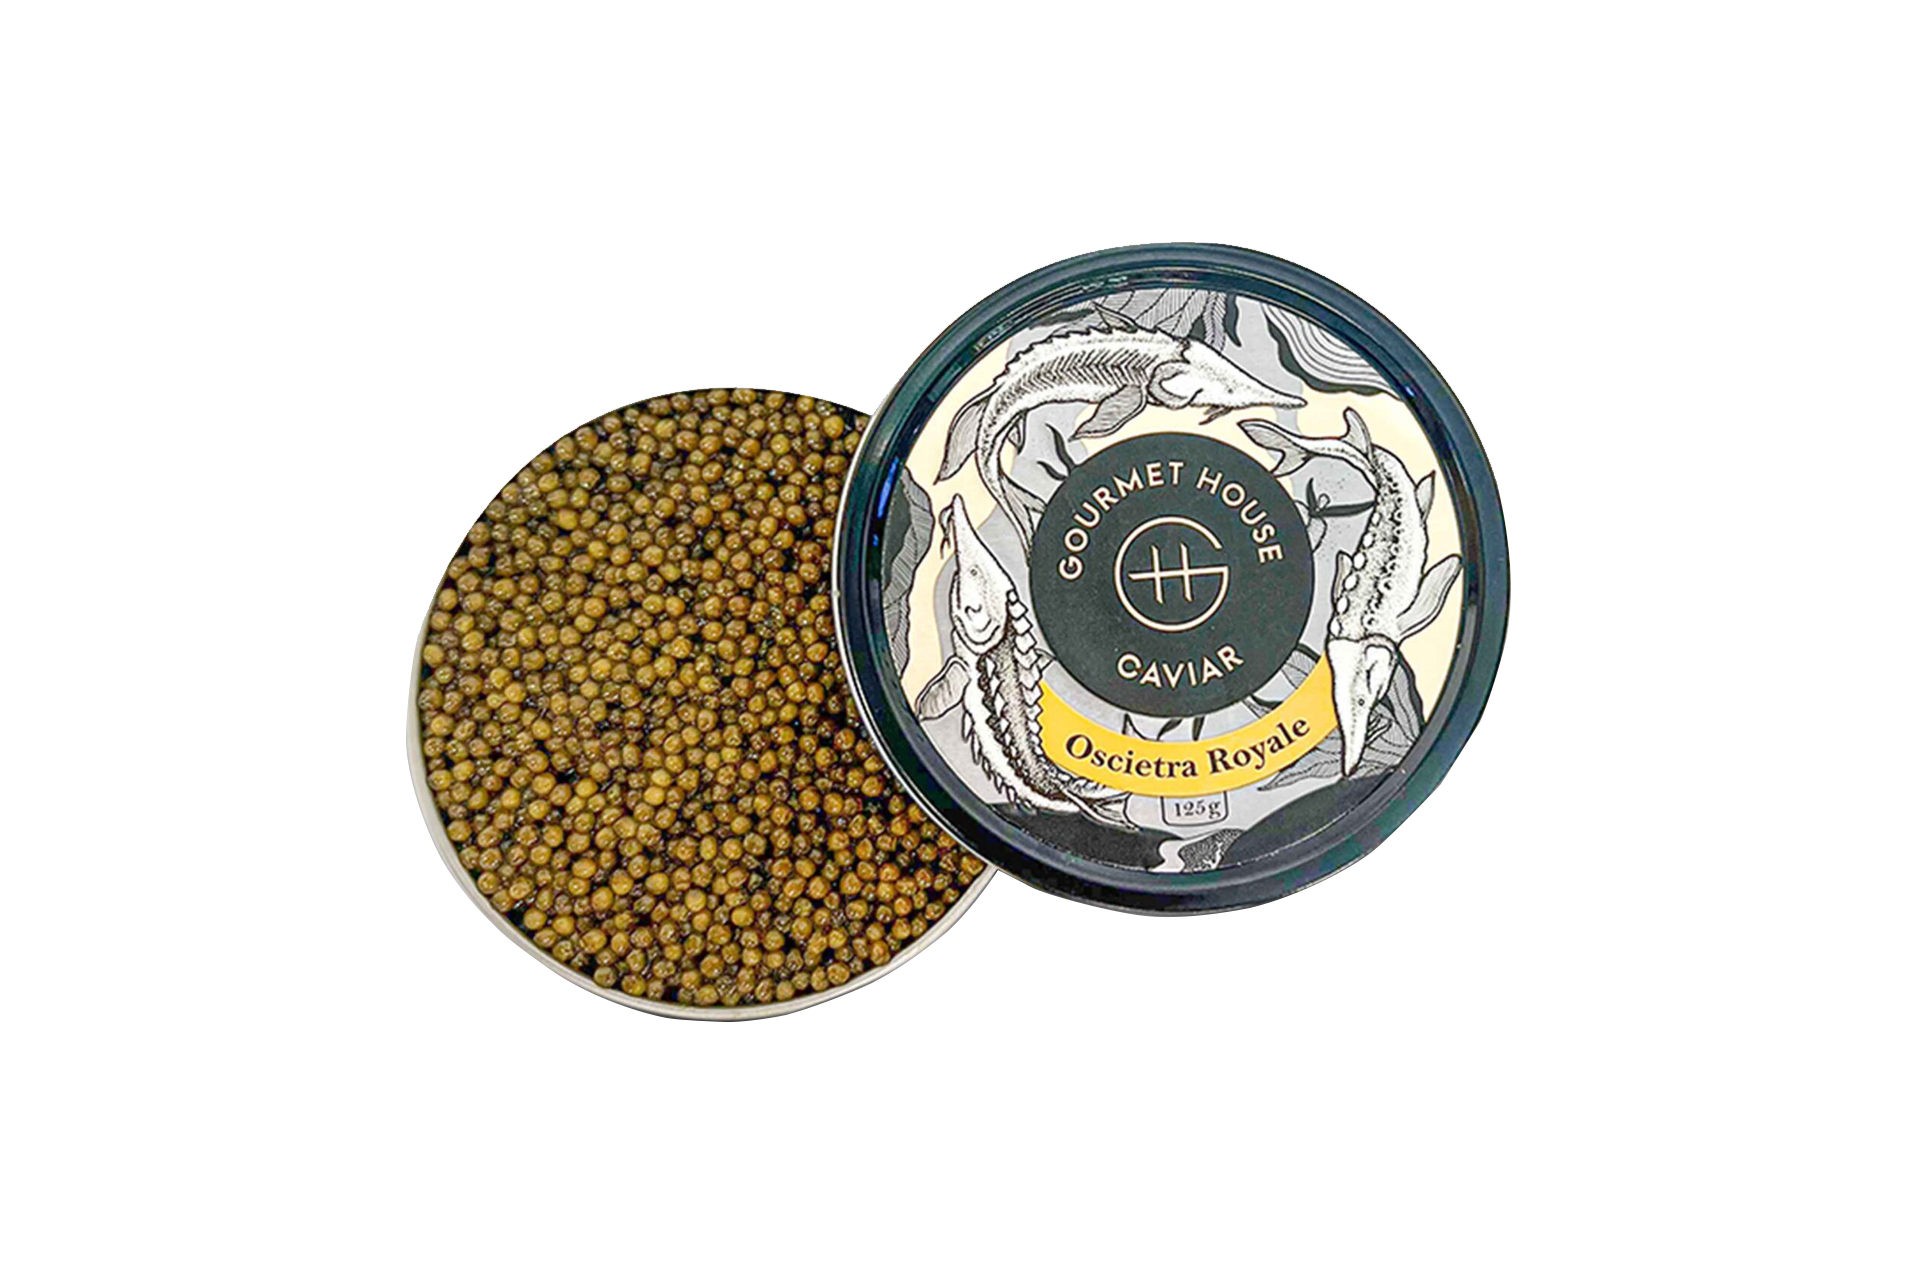 Oscietra Royale Caviar